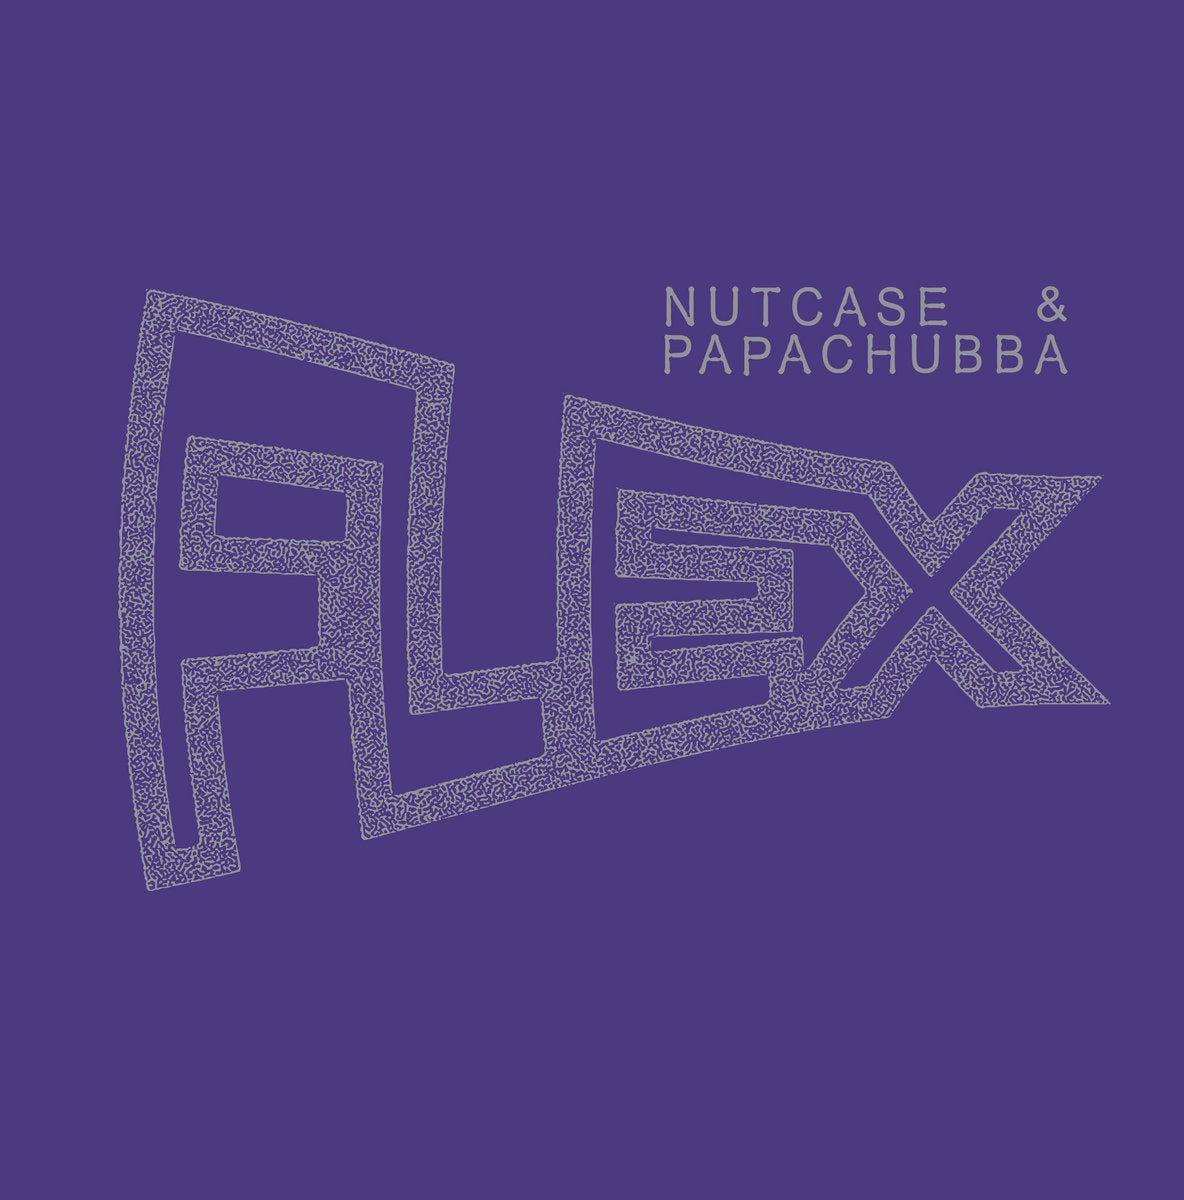 NUTCASE & PAPACHUBBA - "FLEX" 12"